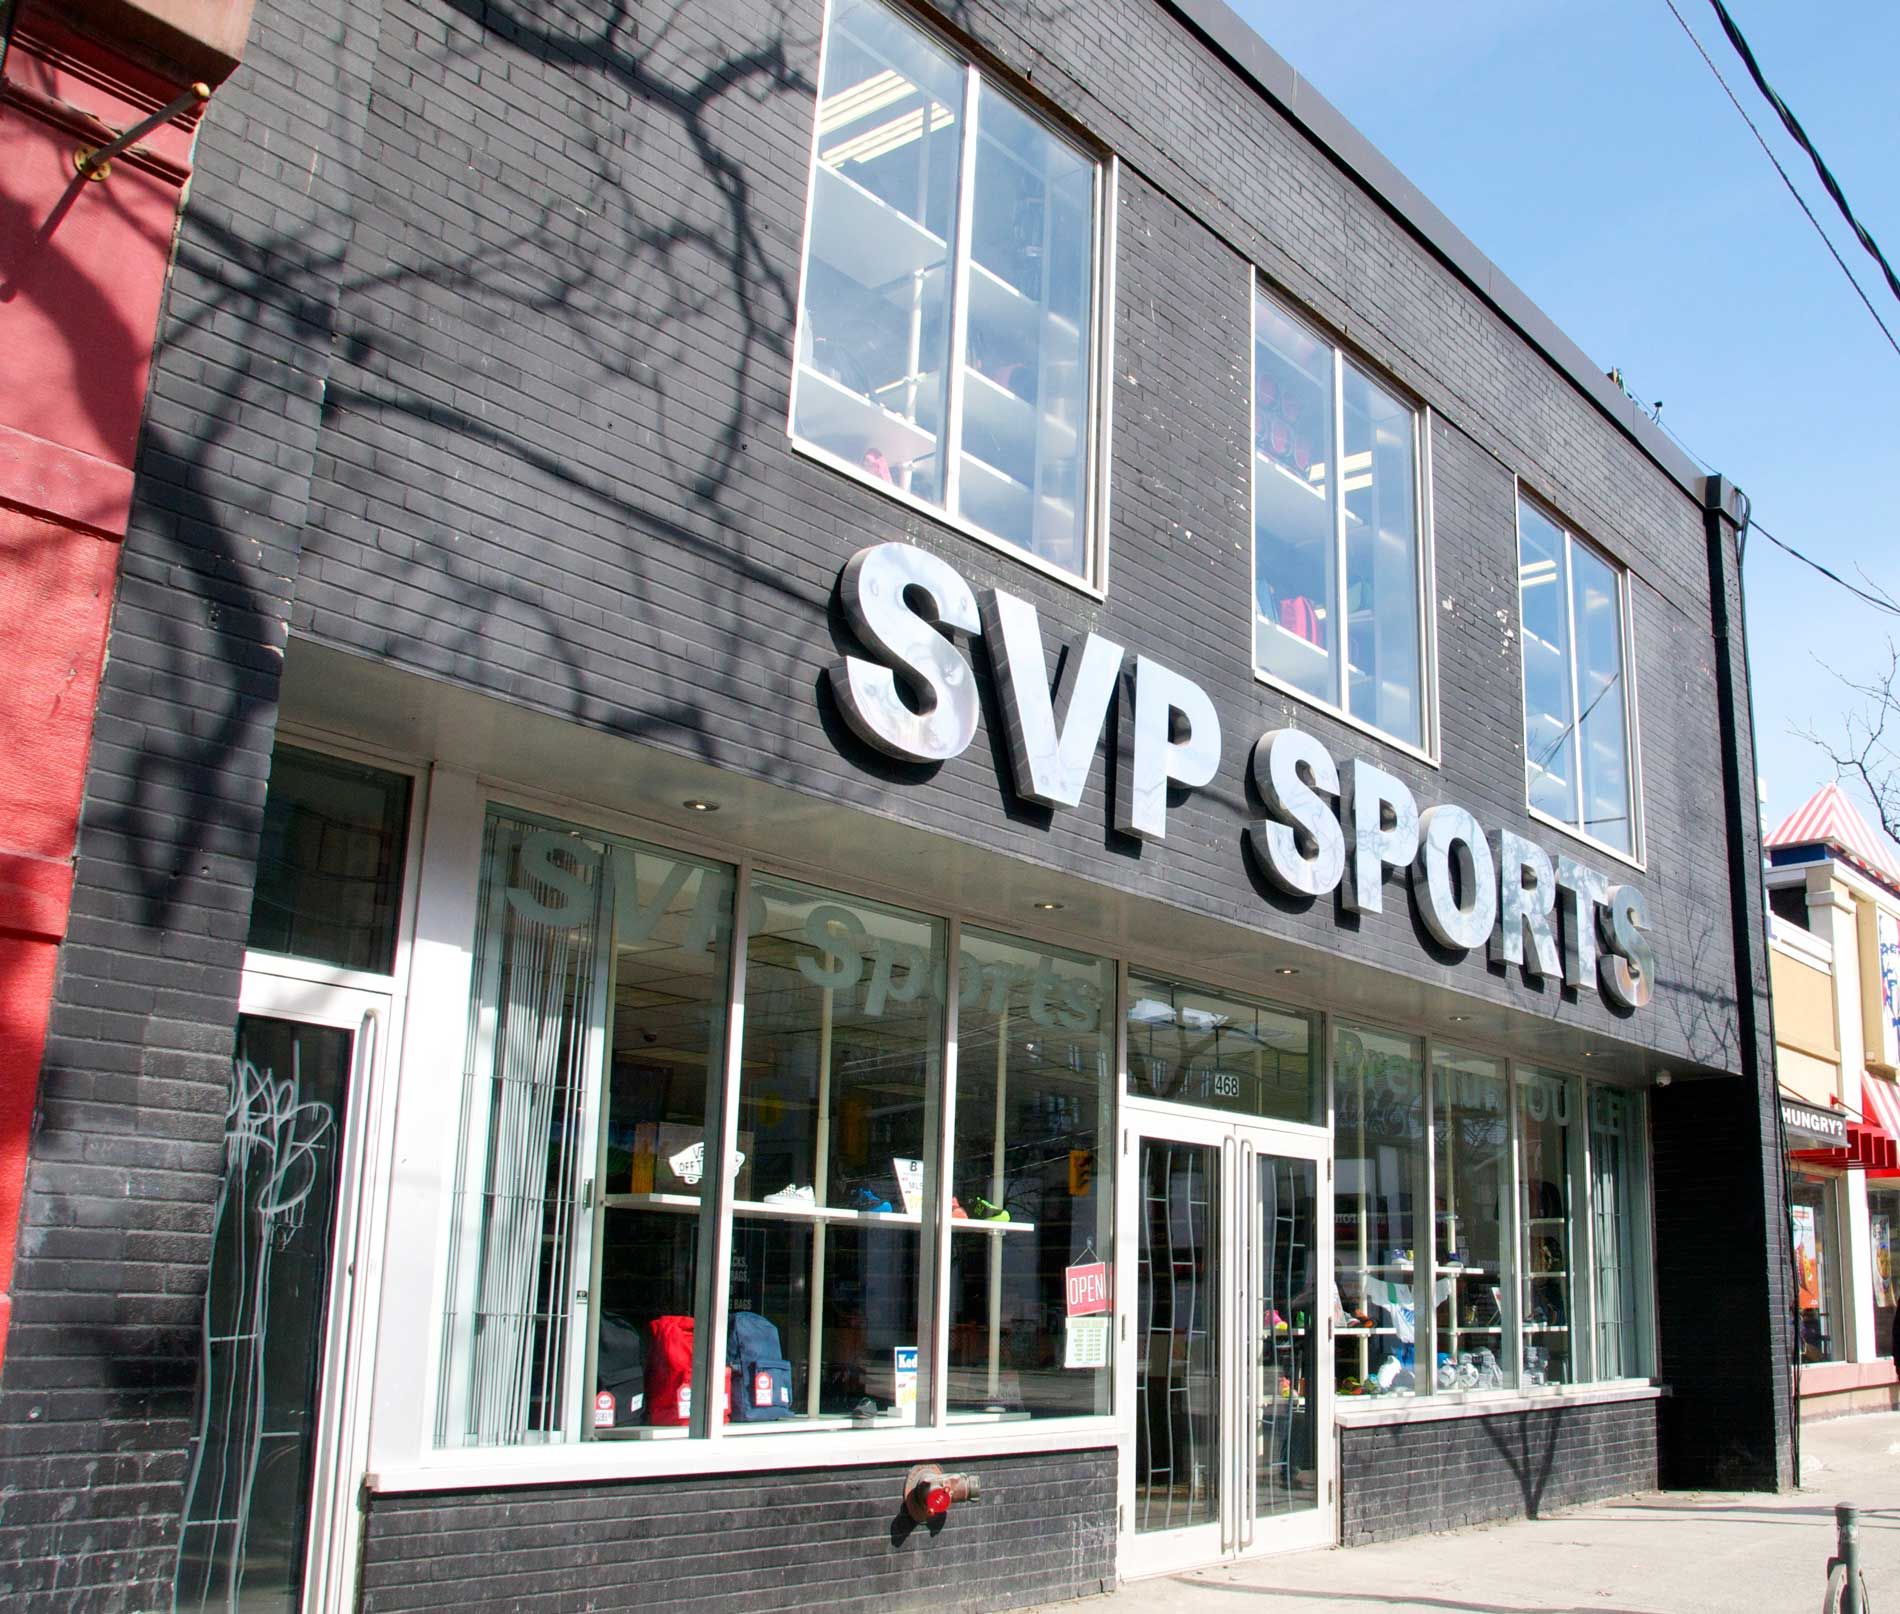 SVP Sports Vaughan